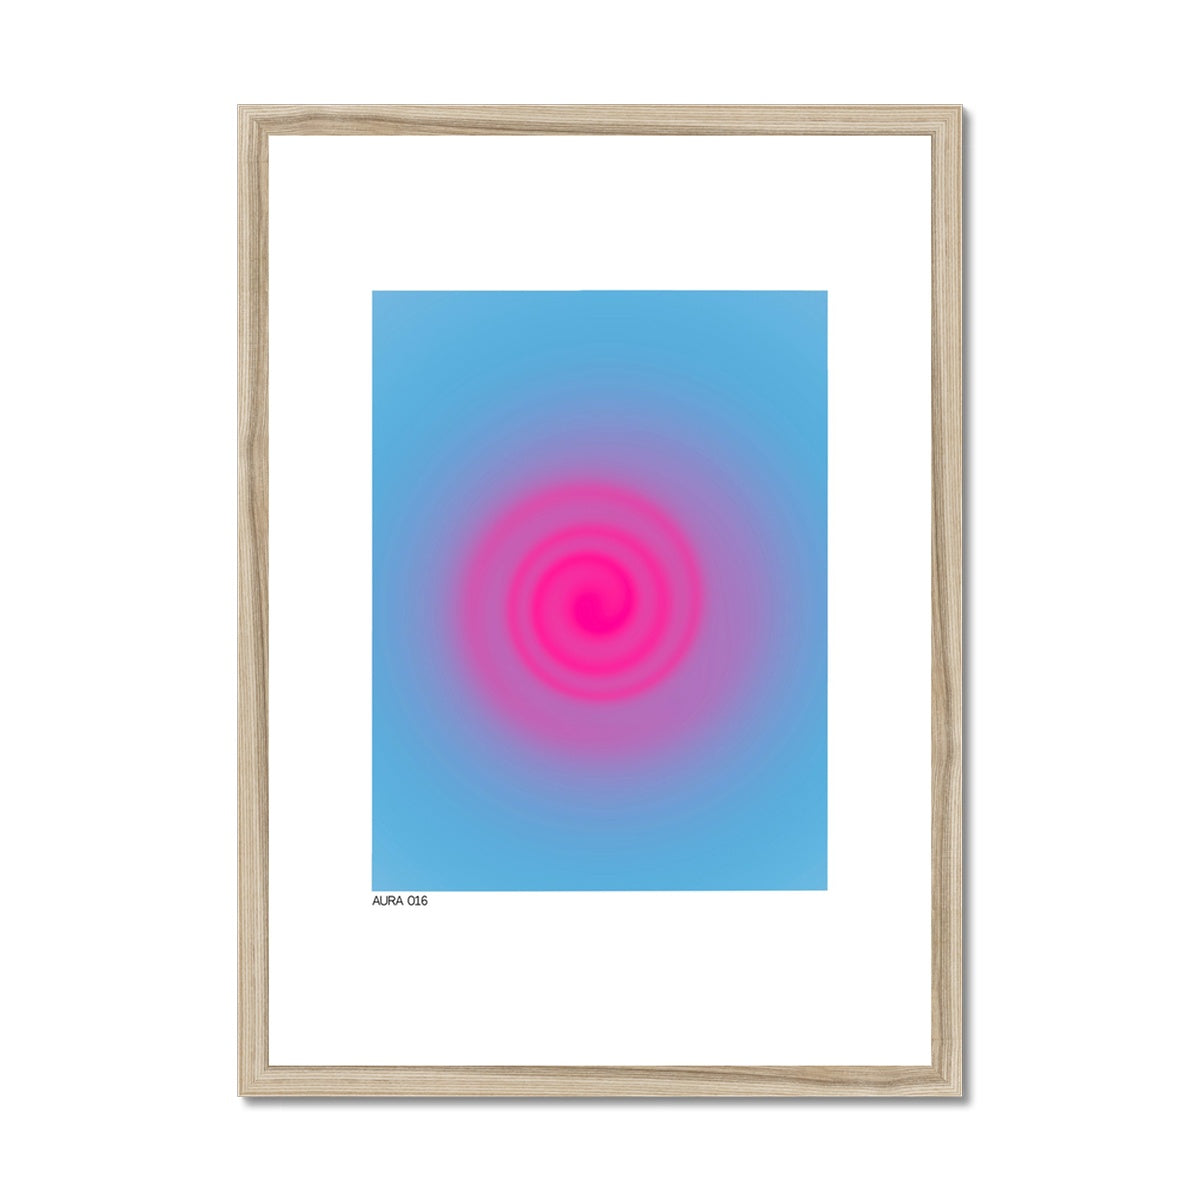 aura 016 Framed & Mounted Print